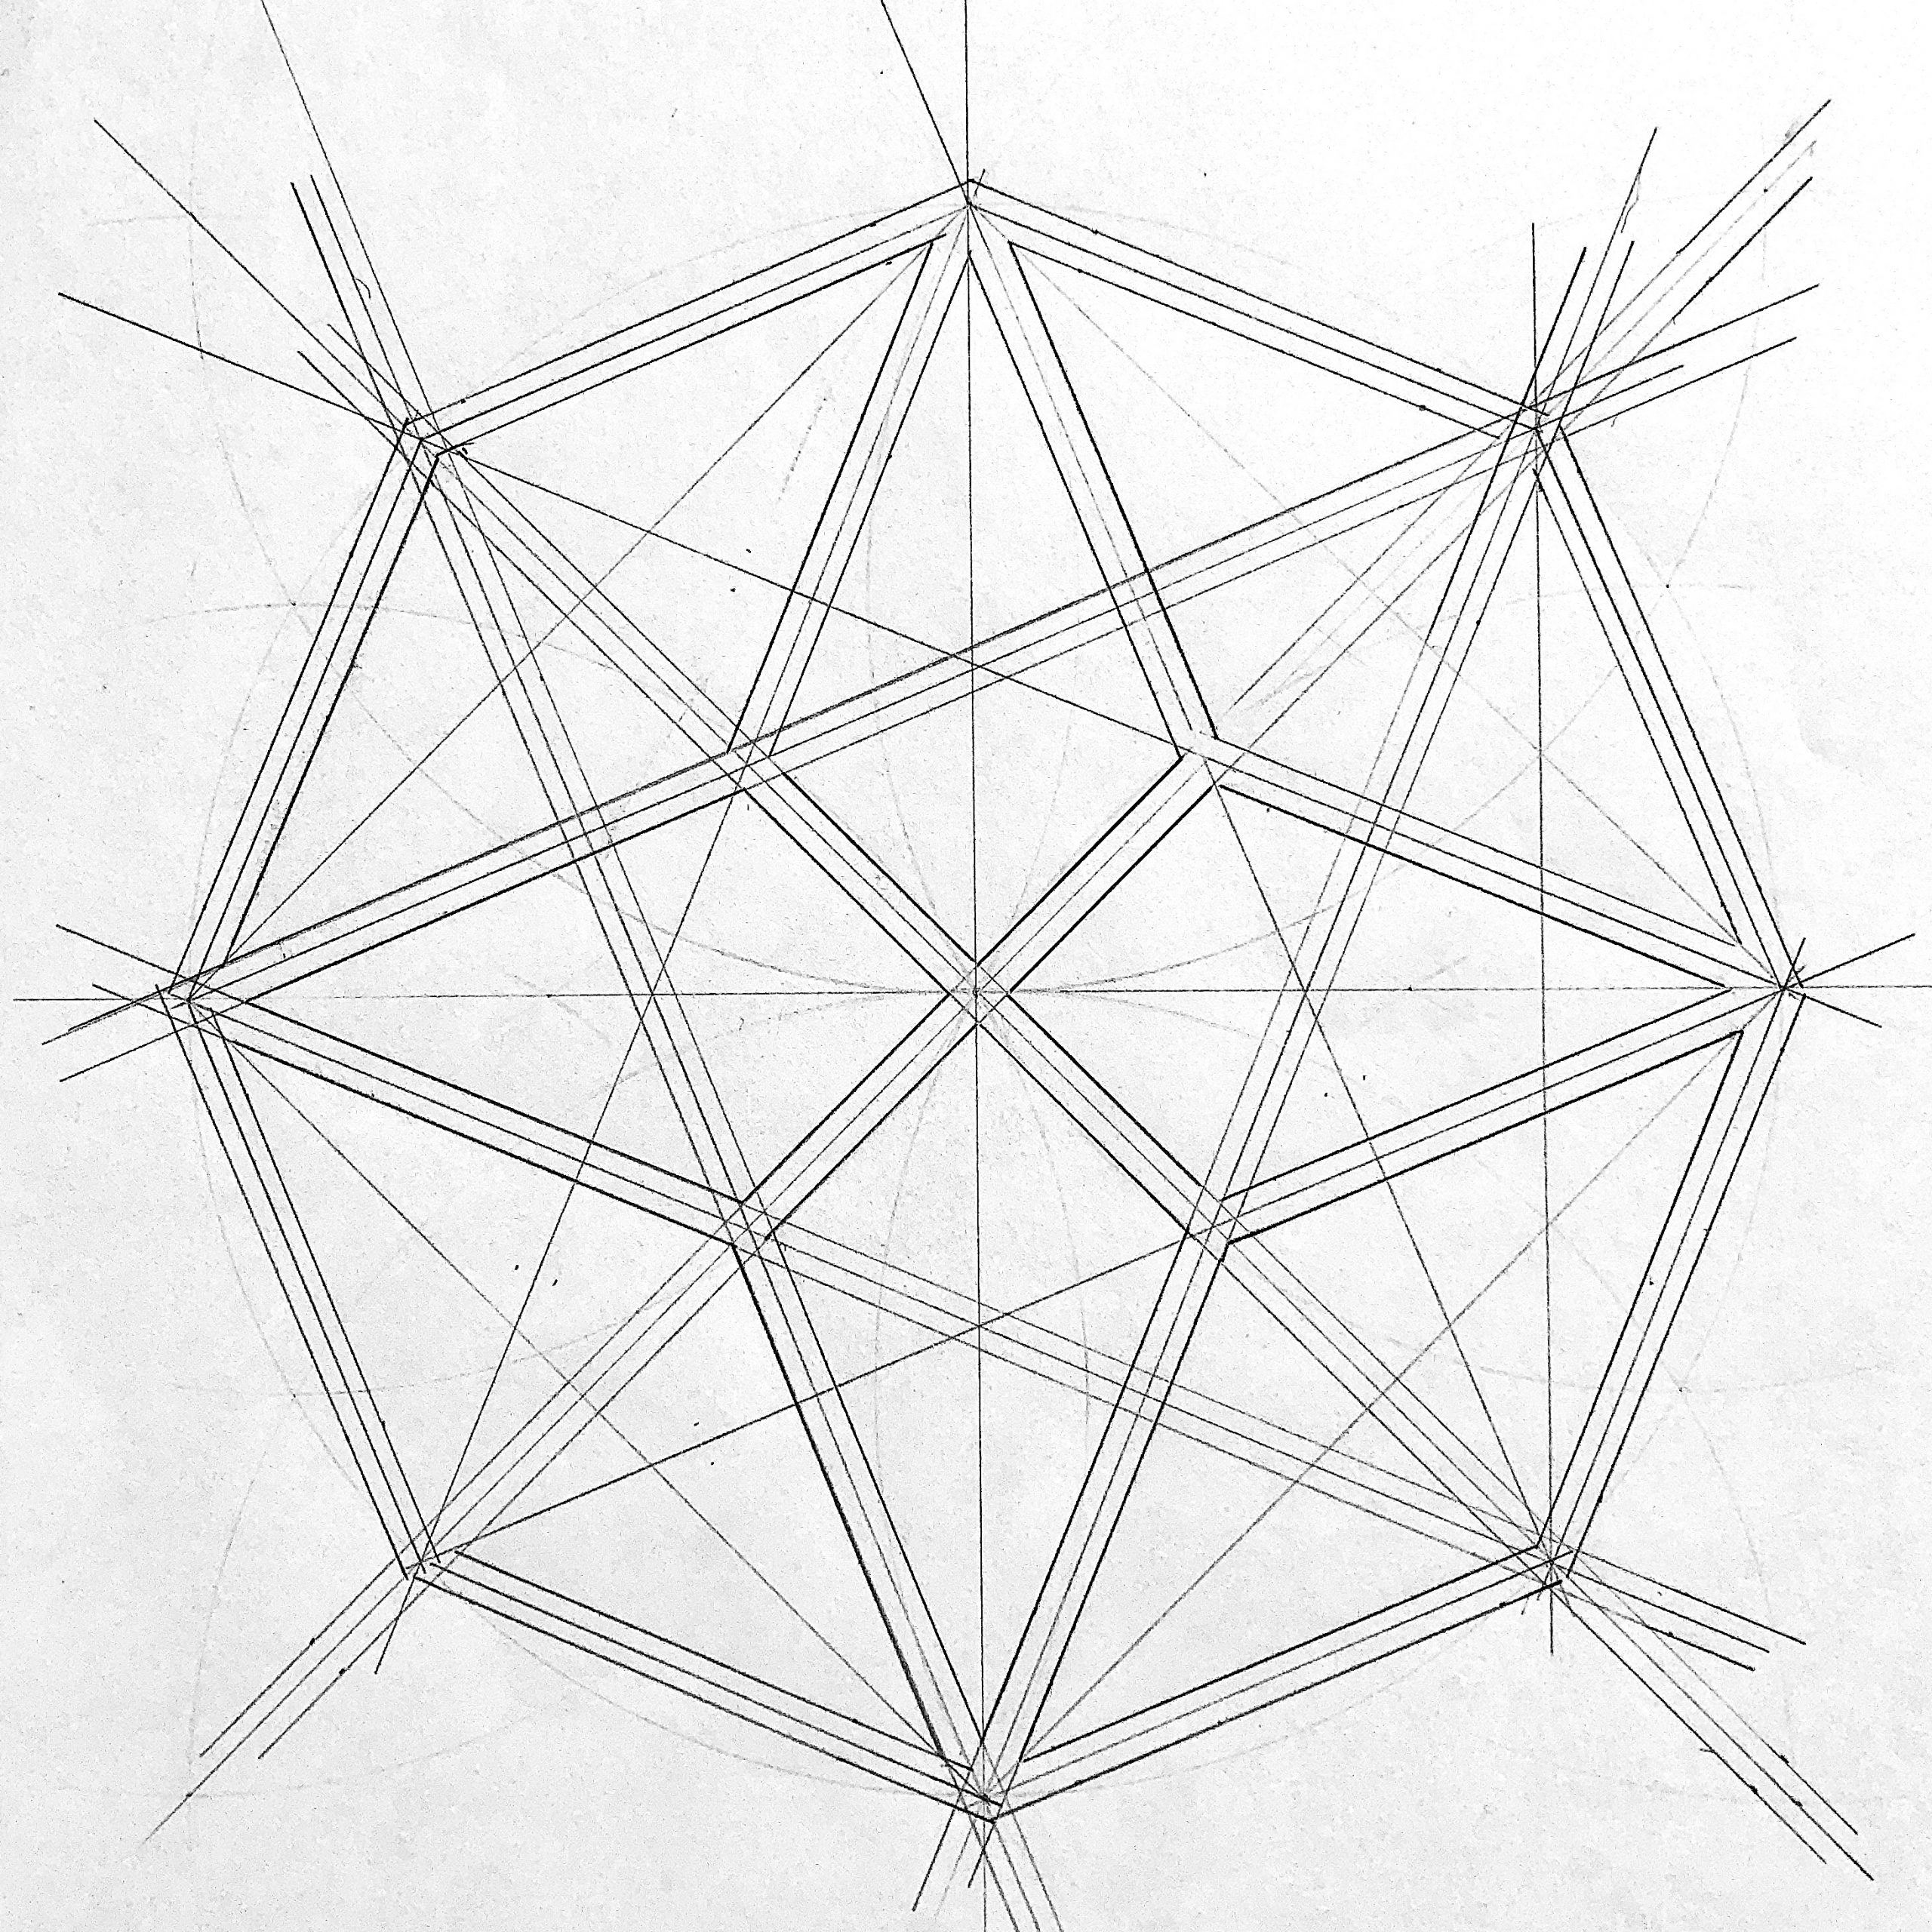 Pencil drawn geometric pattern based on an octagon 